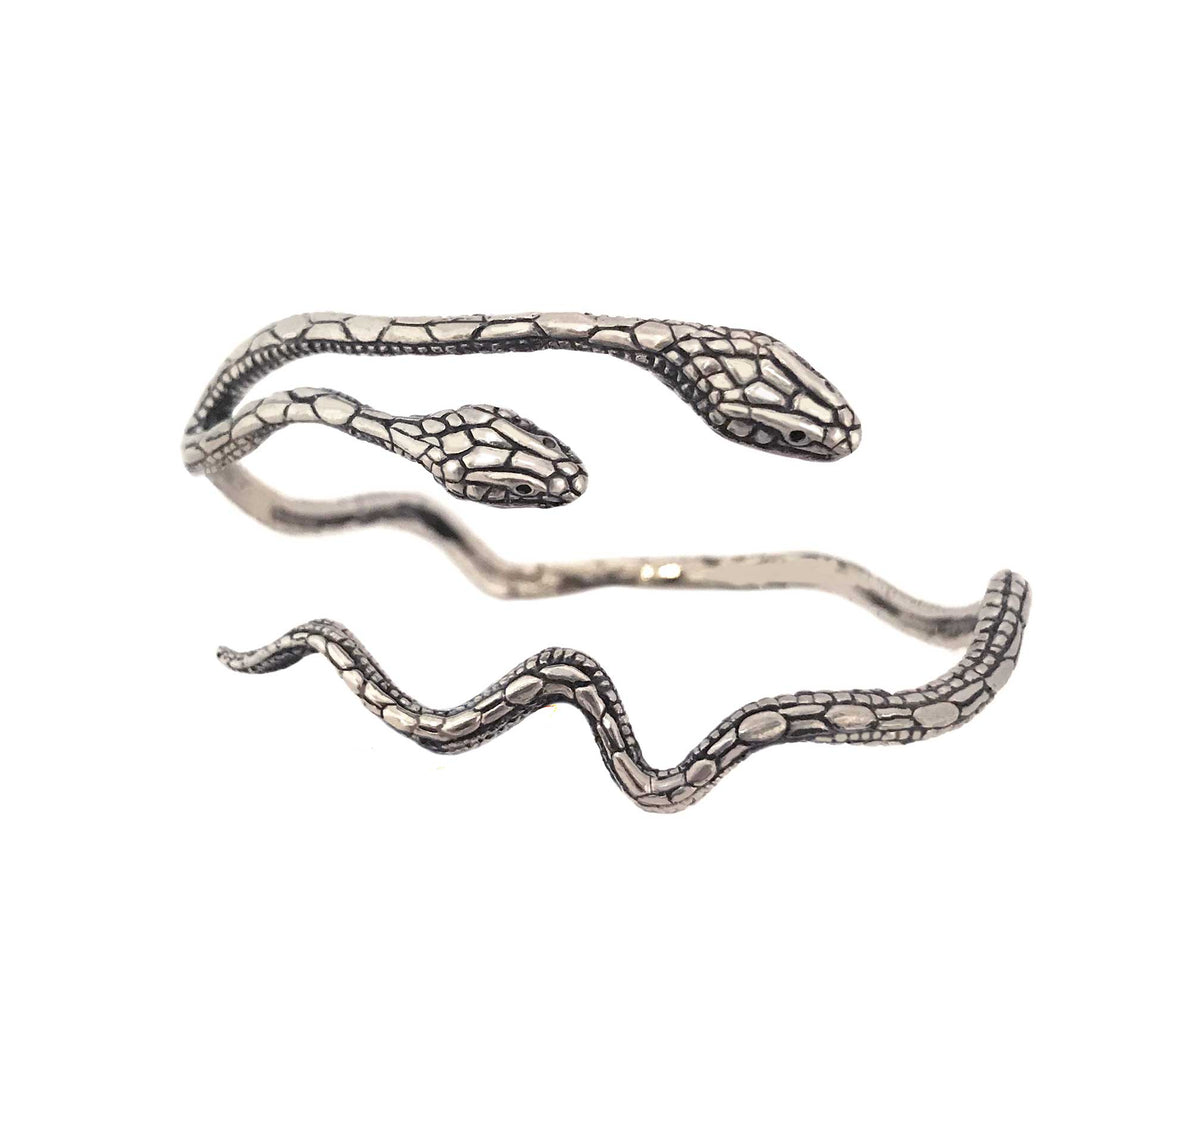 Silver Snake Wrist Cuff Bracelet Serpent Arm Cuff Snake Jewelry